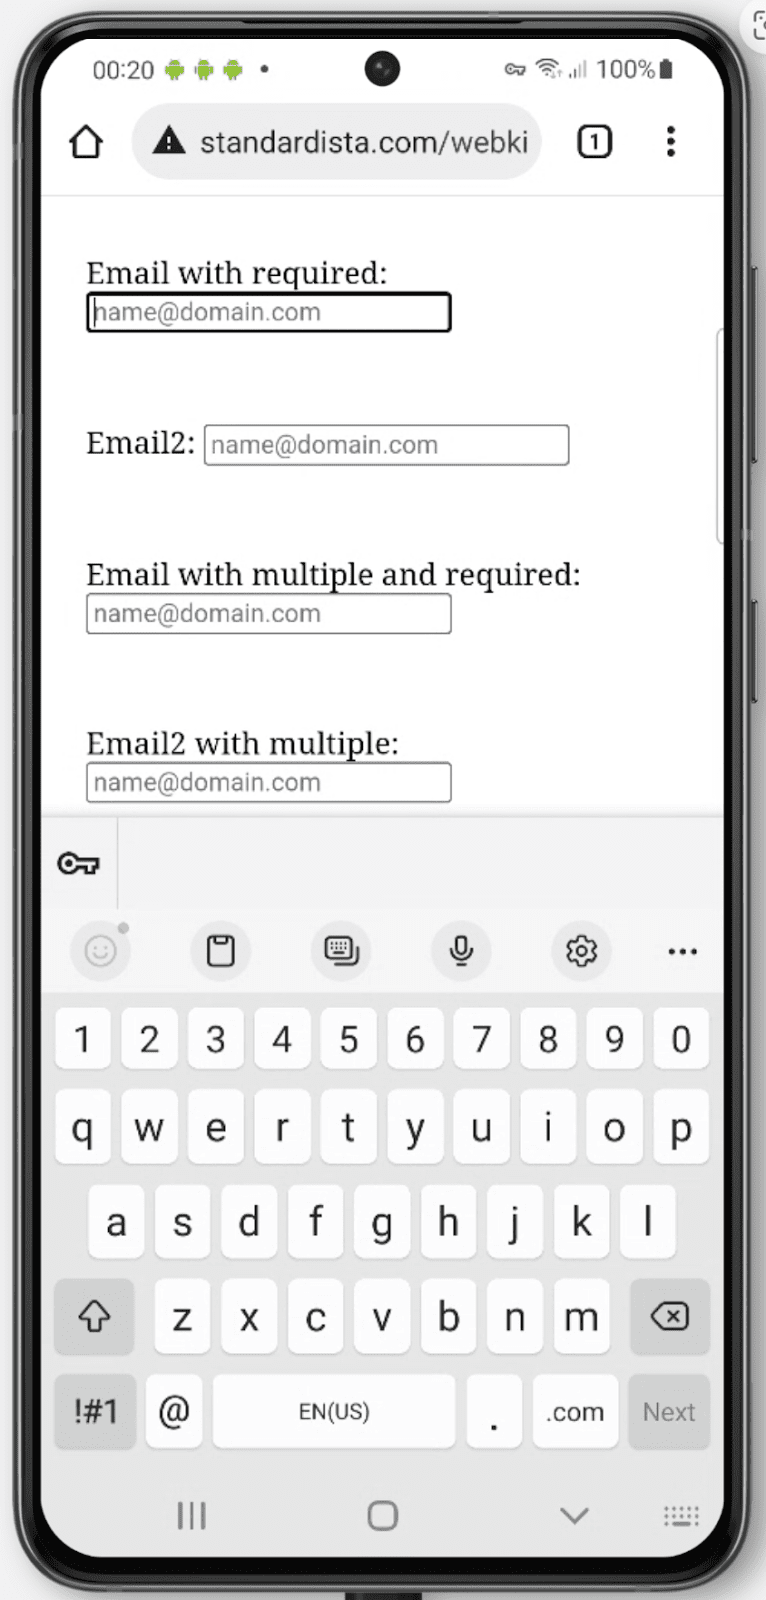 Teclado do Android mostrando entrada type=email.